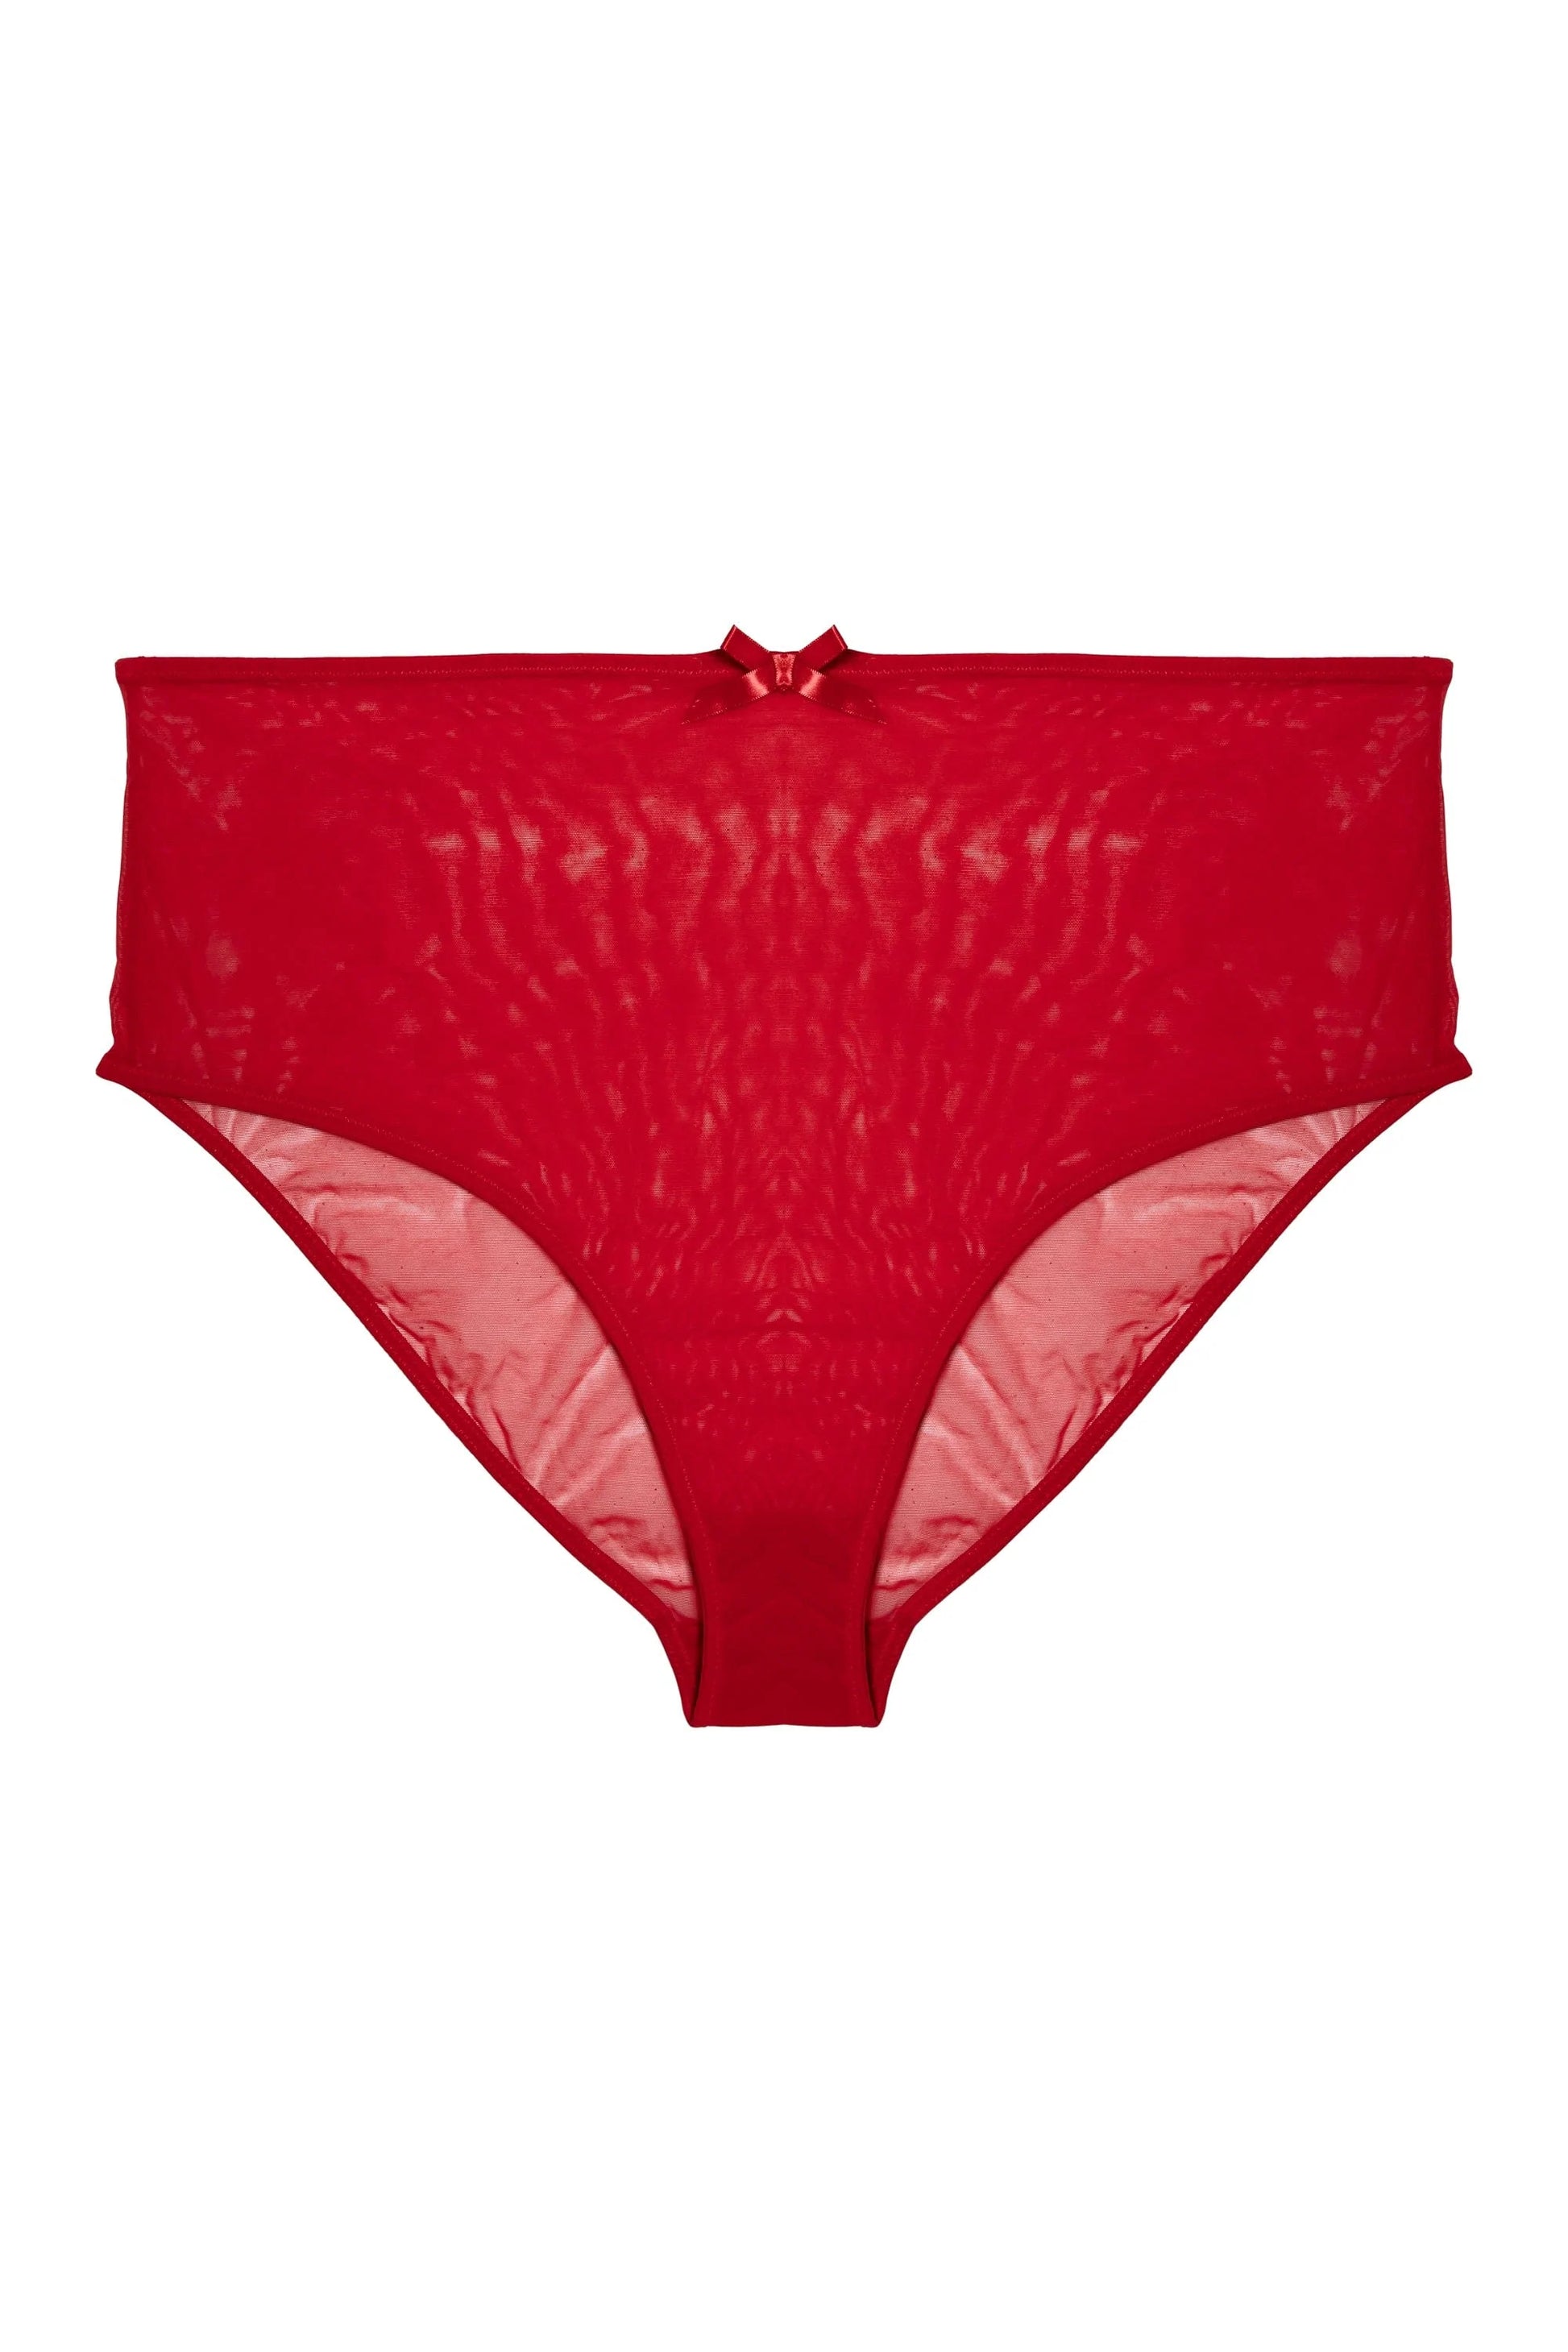 Women Underwear panties 6 Pieces - Multi Color size M price in Saudi Arabia,  Saudi Arabia